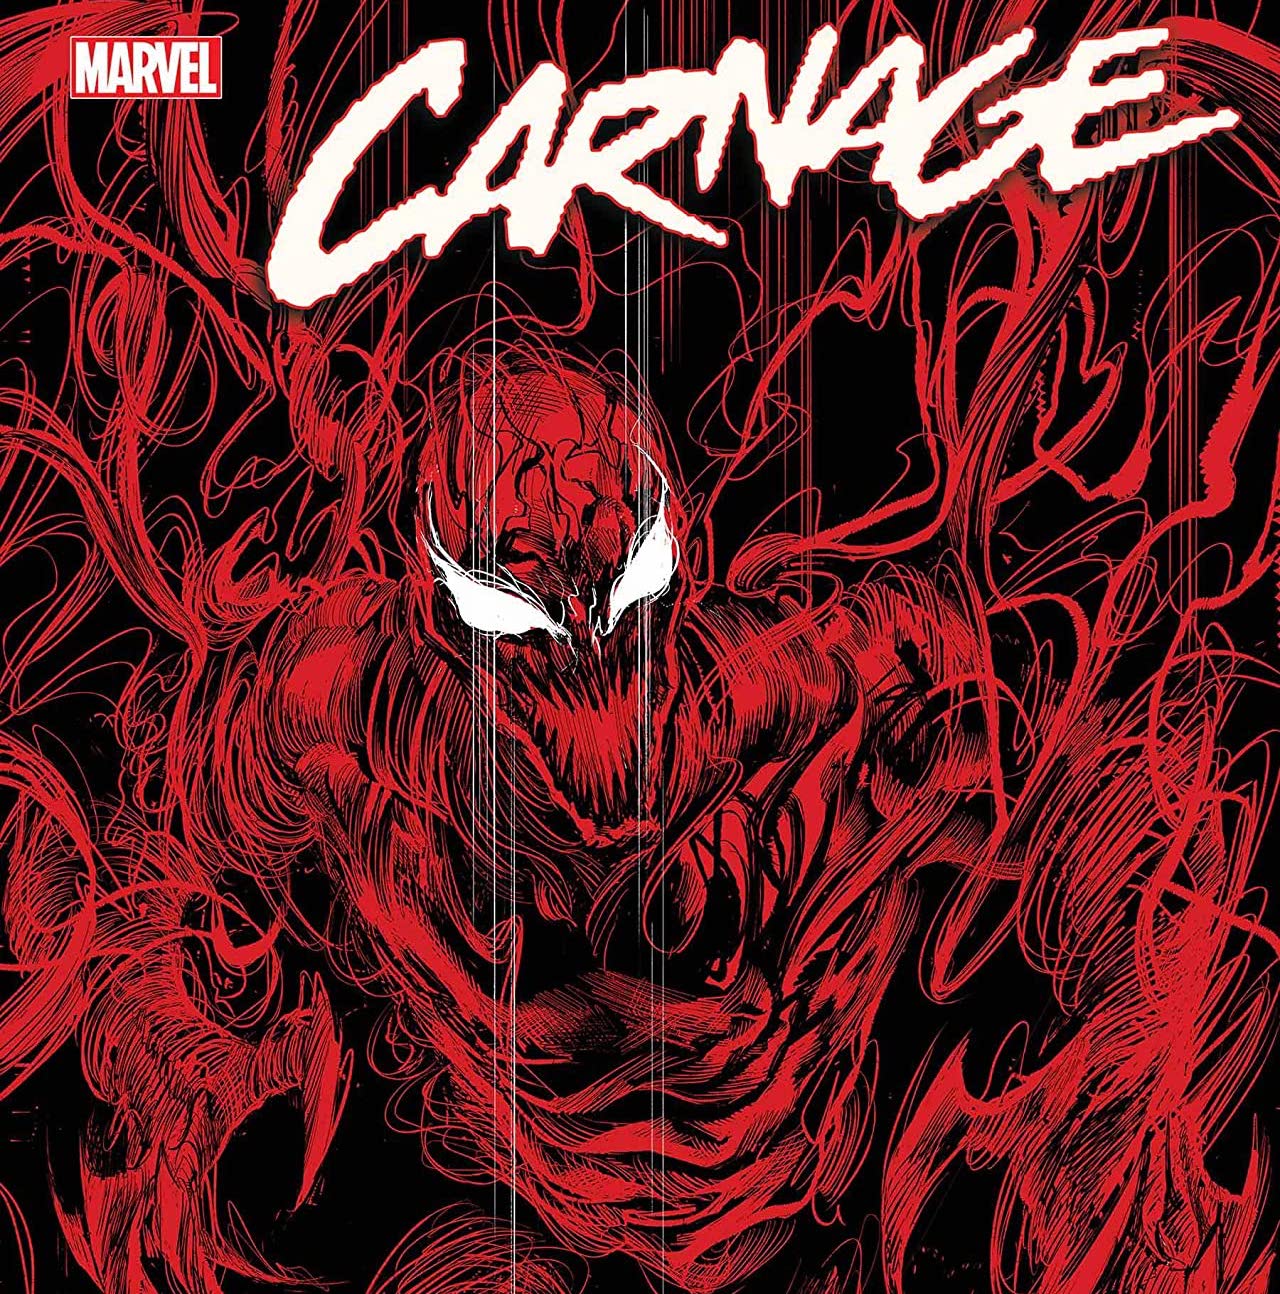 'Carnage: Black, White & Blood' #2 is good horror comics